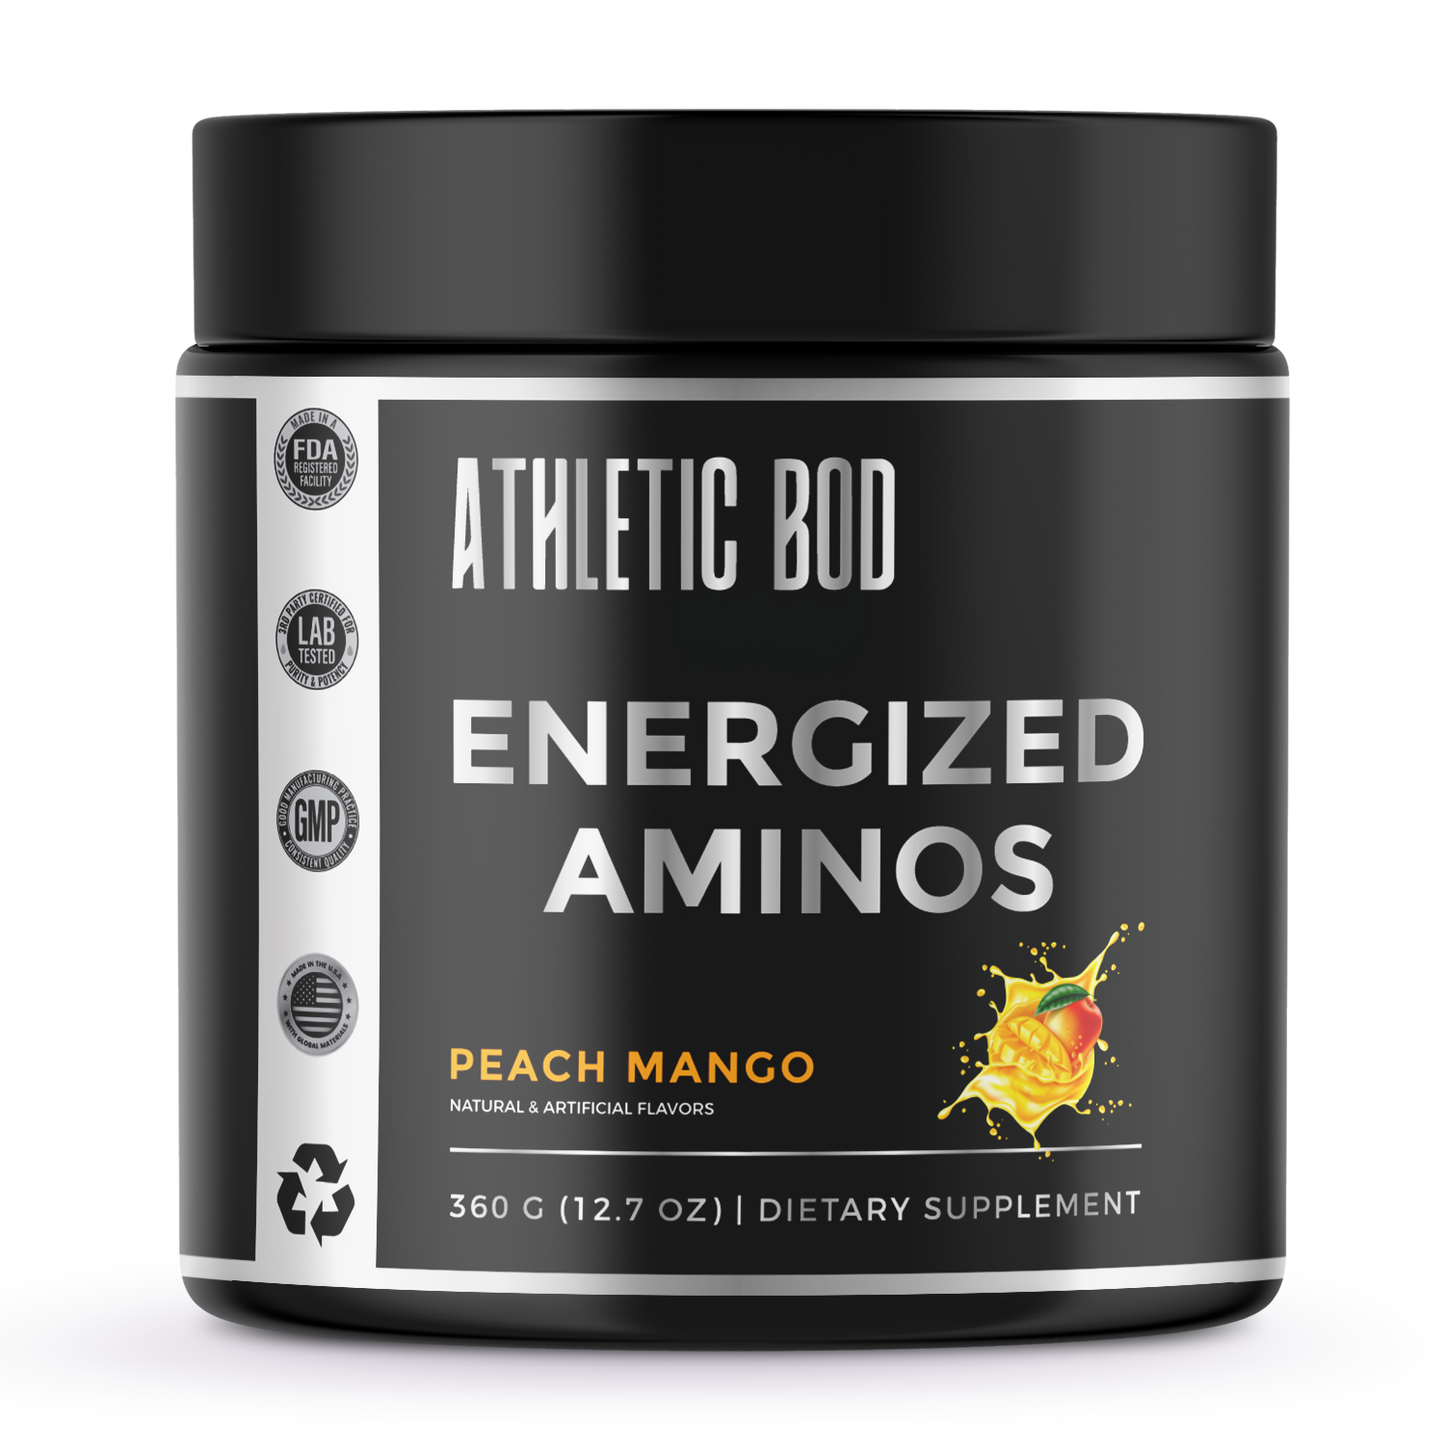 Energized Aminos Peach Mango